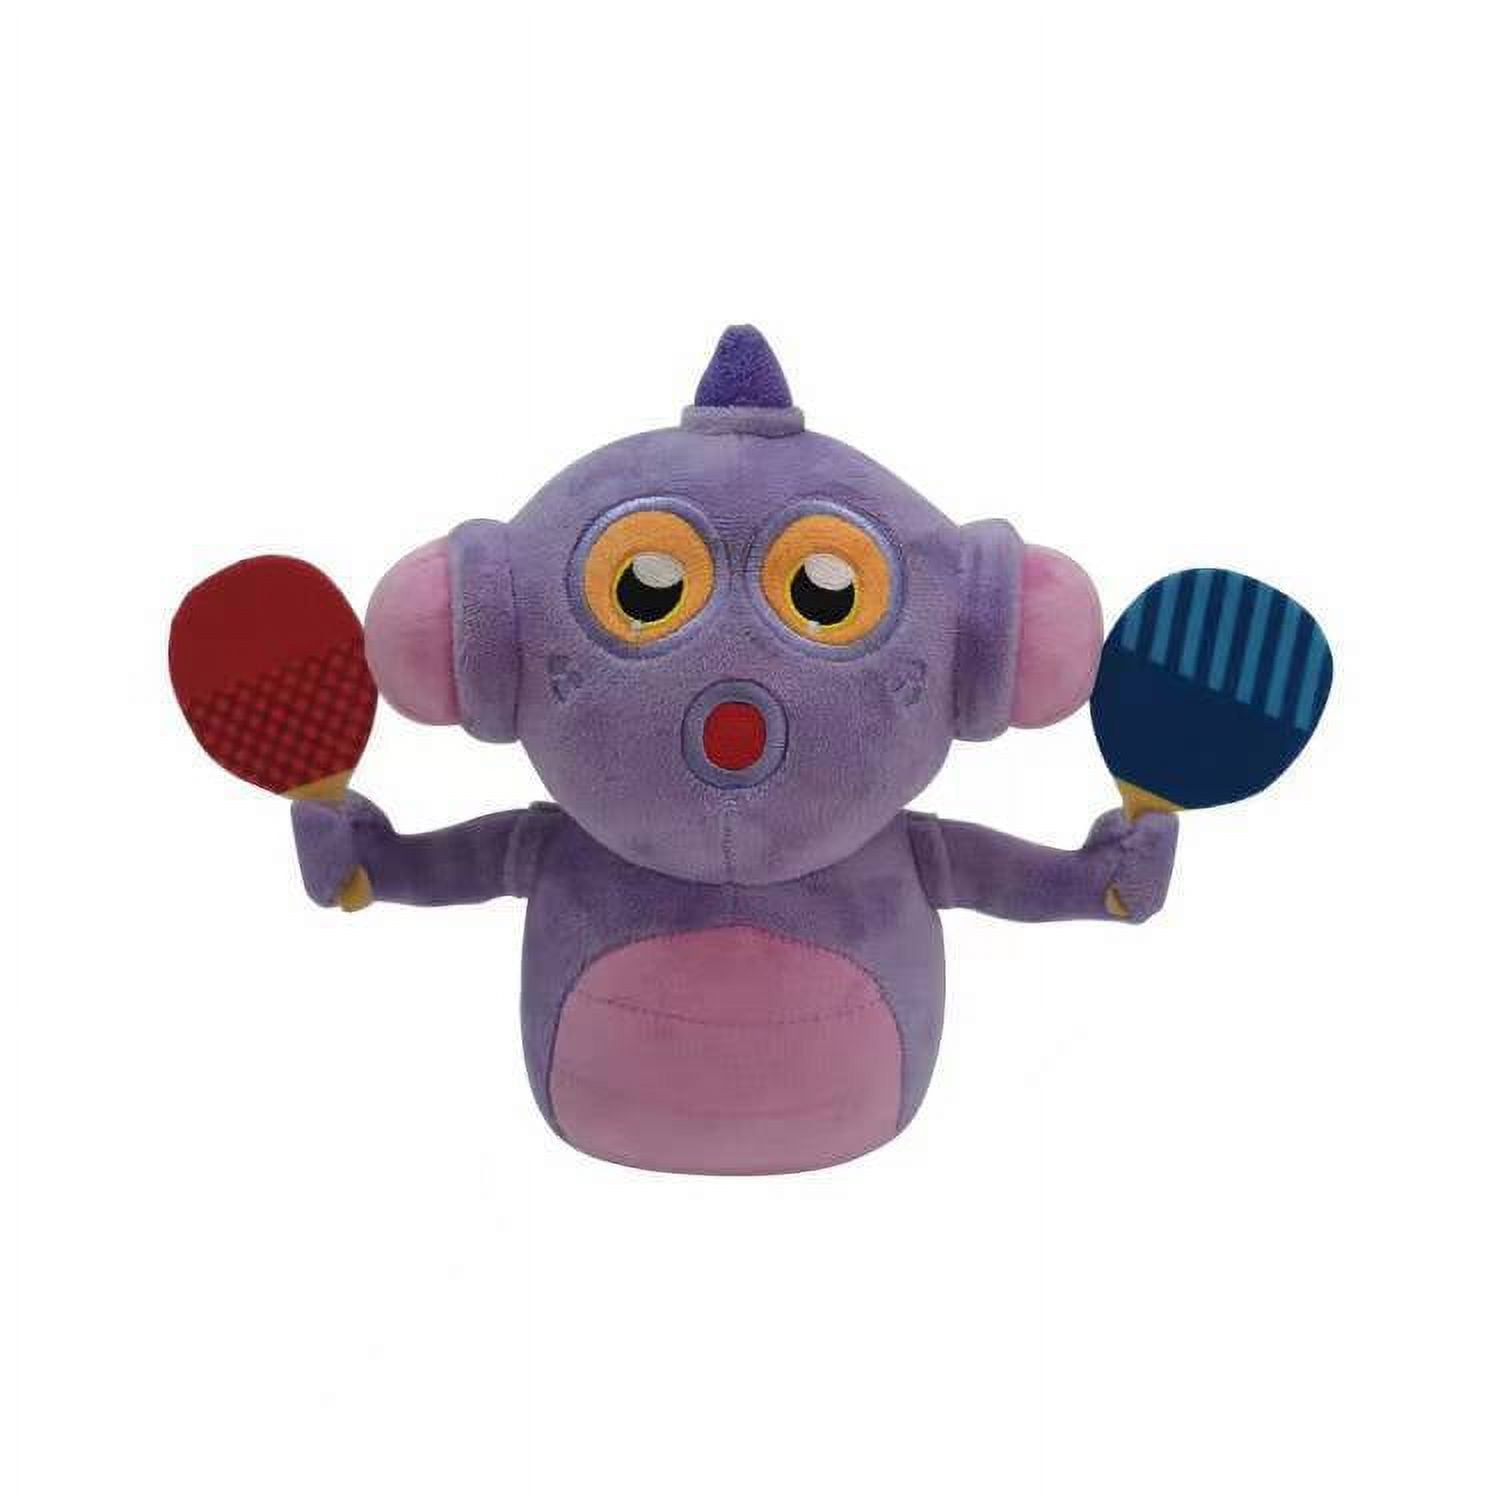 Wubbox Plush, 11.8-inch Wubbox Plush My Singing Monster Toy, Gifts